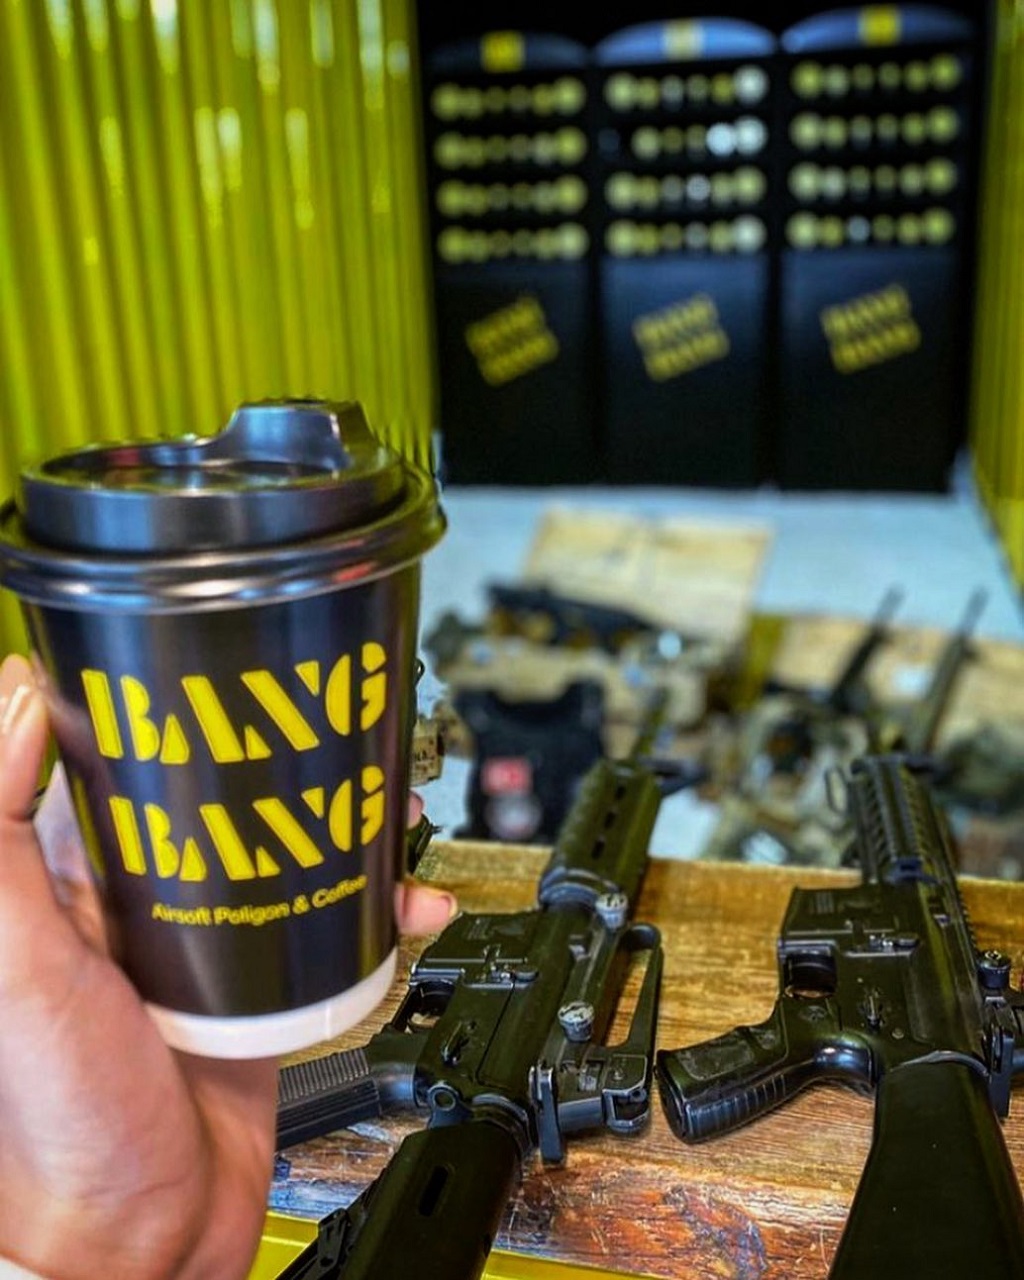 Bang Bang Airsofr & Coffee - Beykoz'da kahve içilecek mekanlar (1)